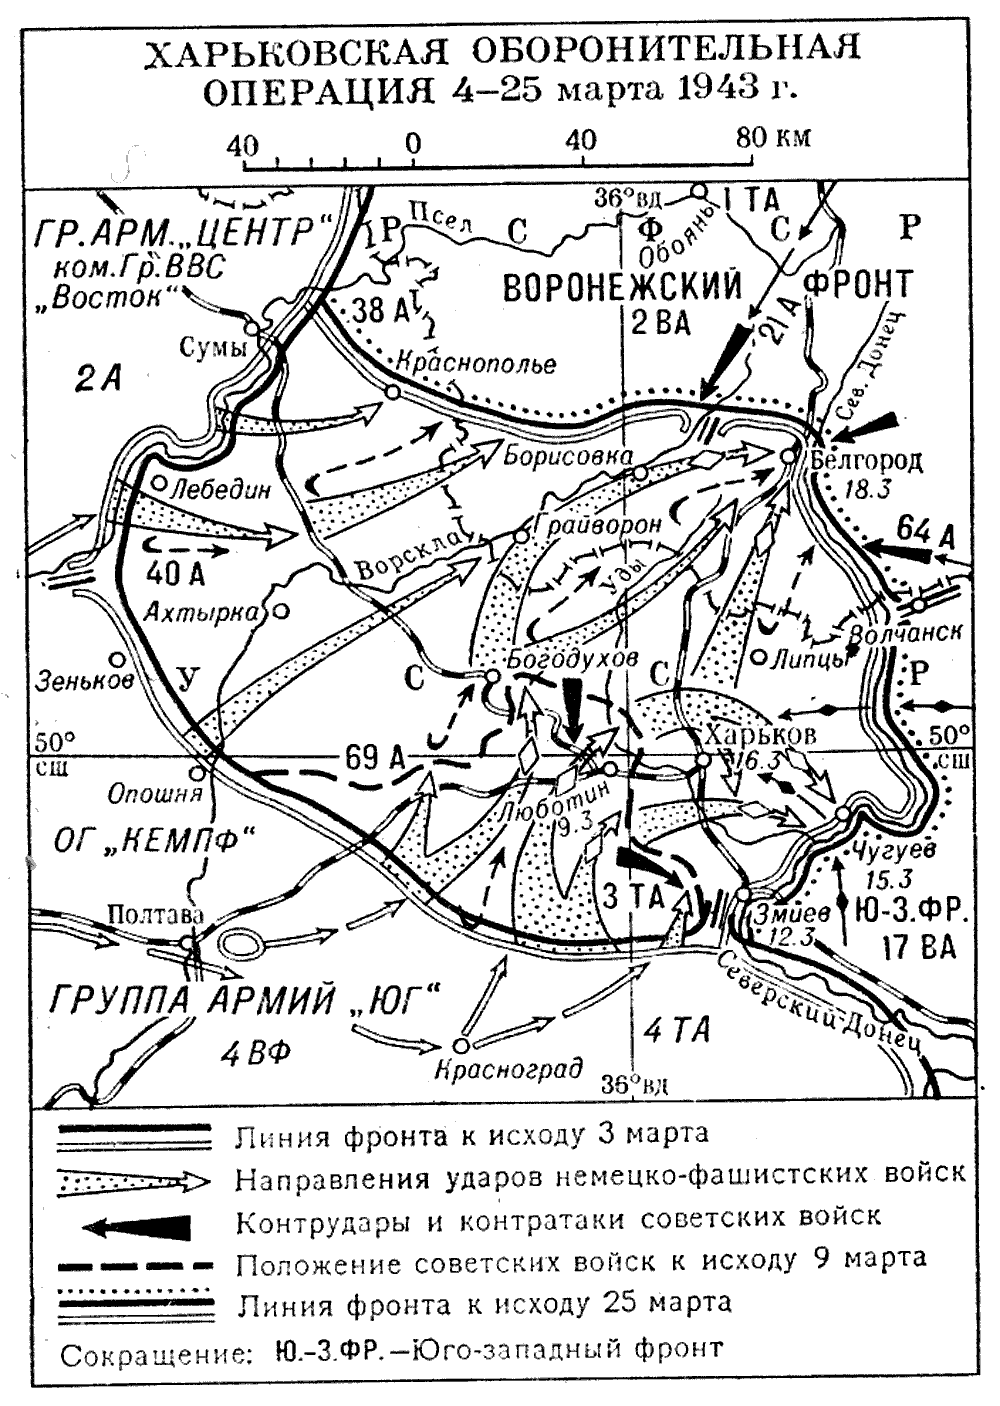 Харьковская военная операция. Харьковская наступательная операция 1943 года.